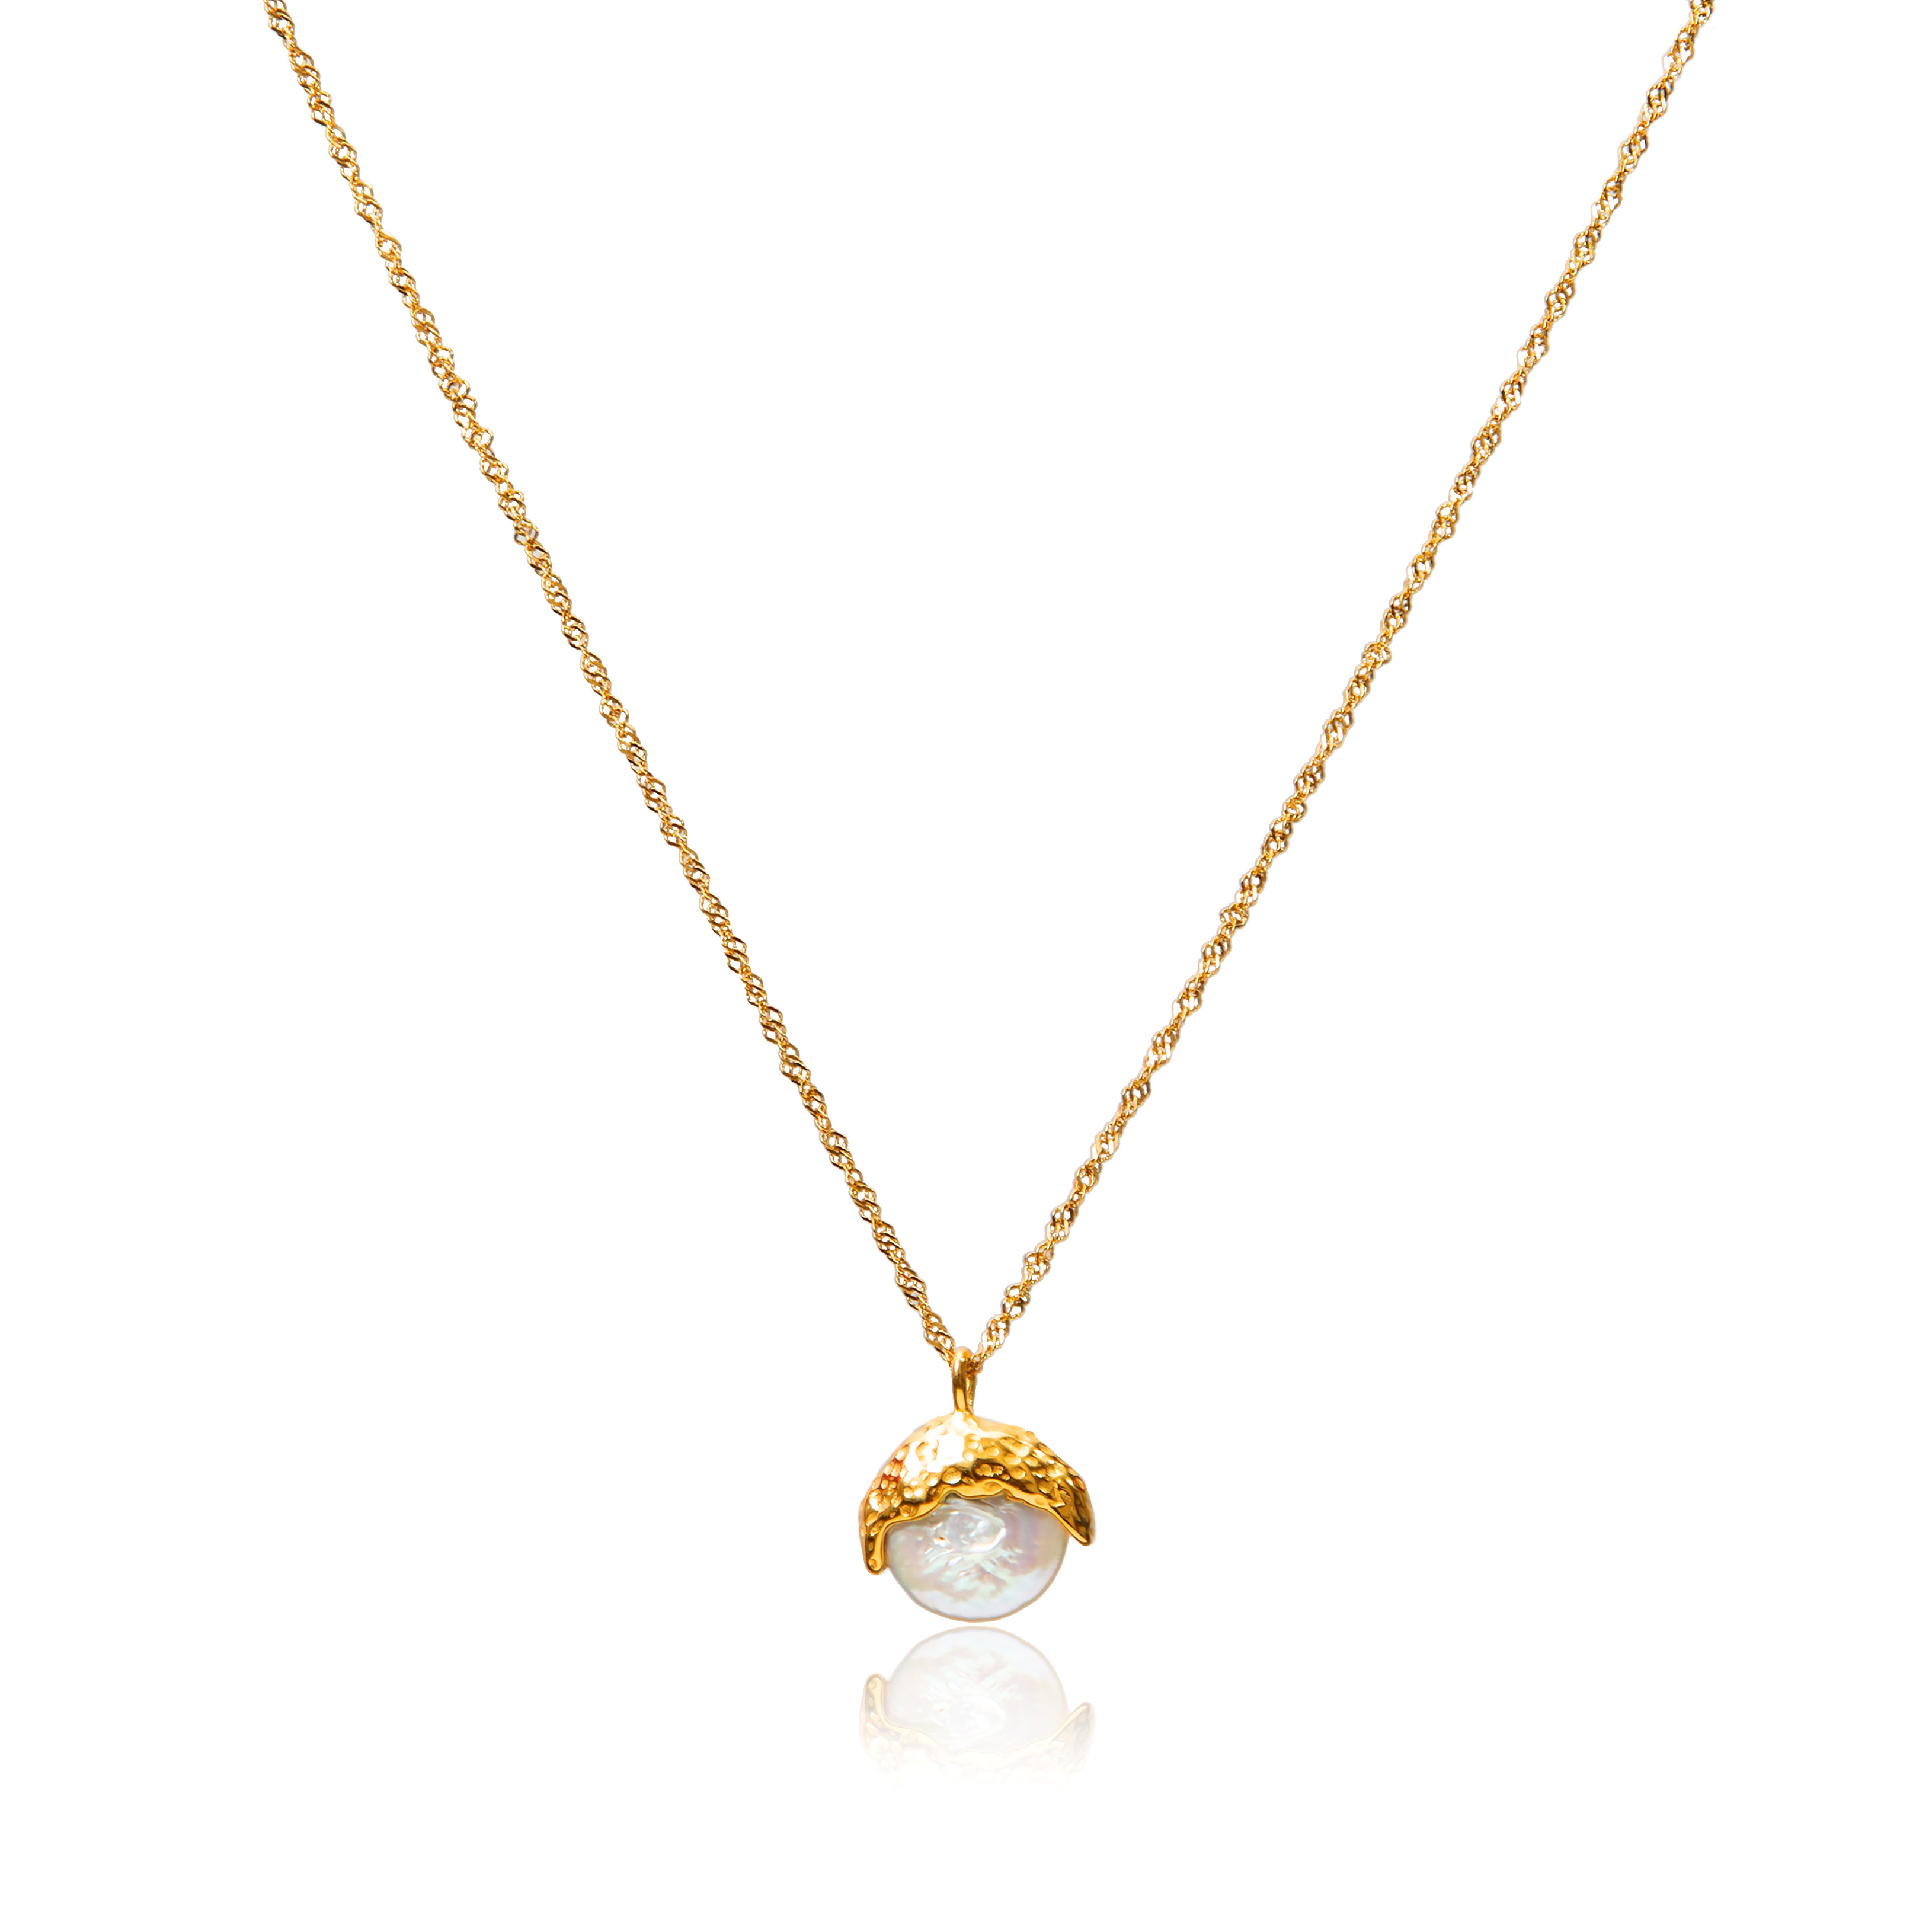 Tseatjewelry Women's Gold Bay Necklace